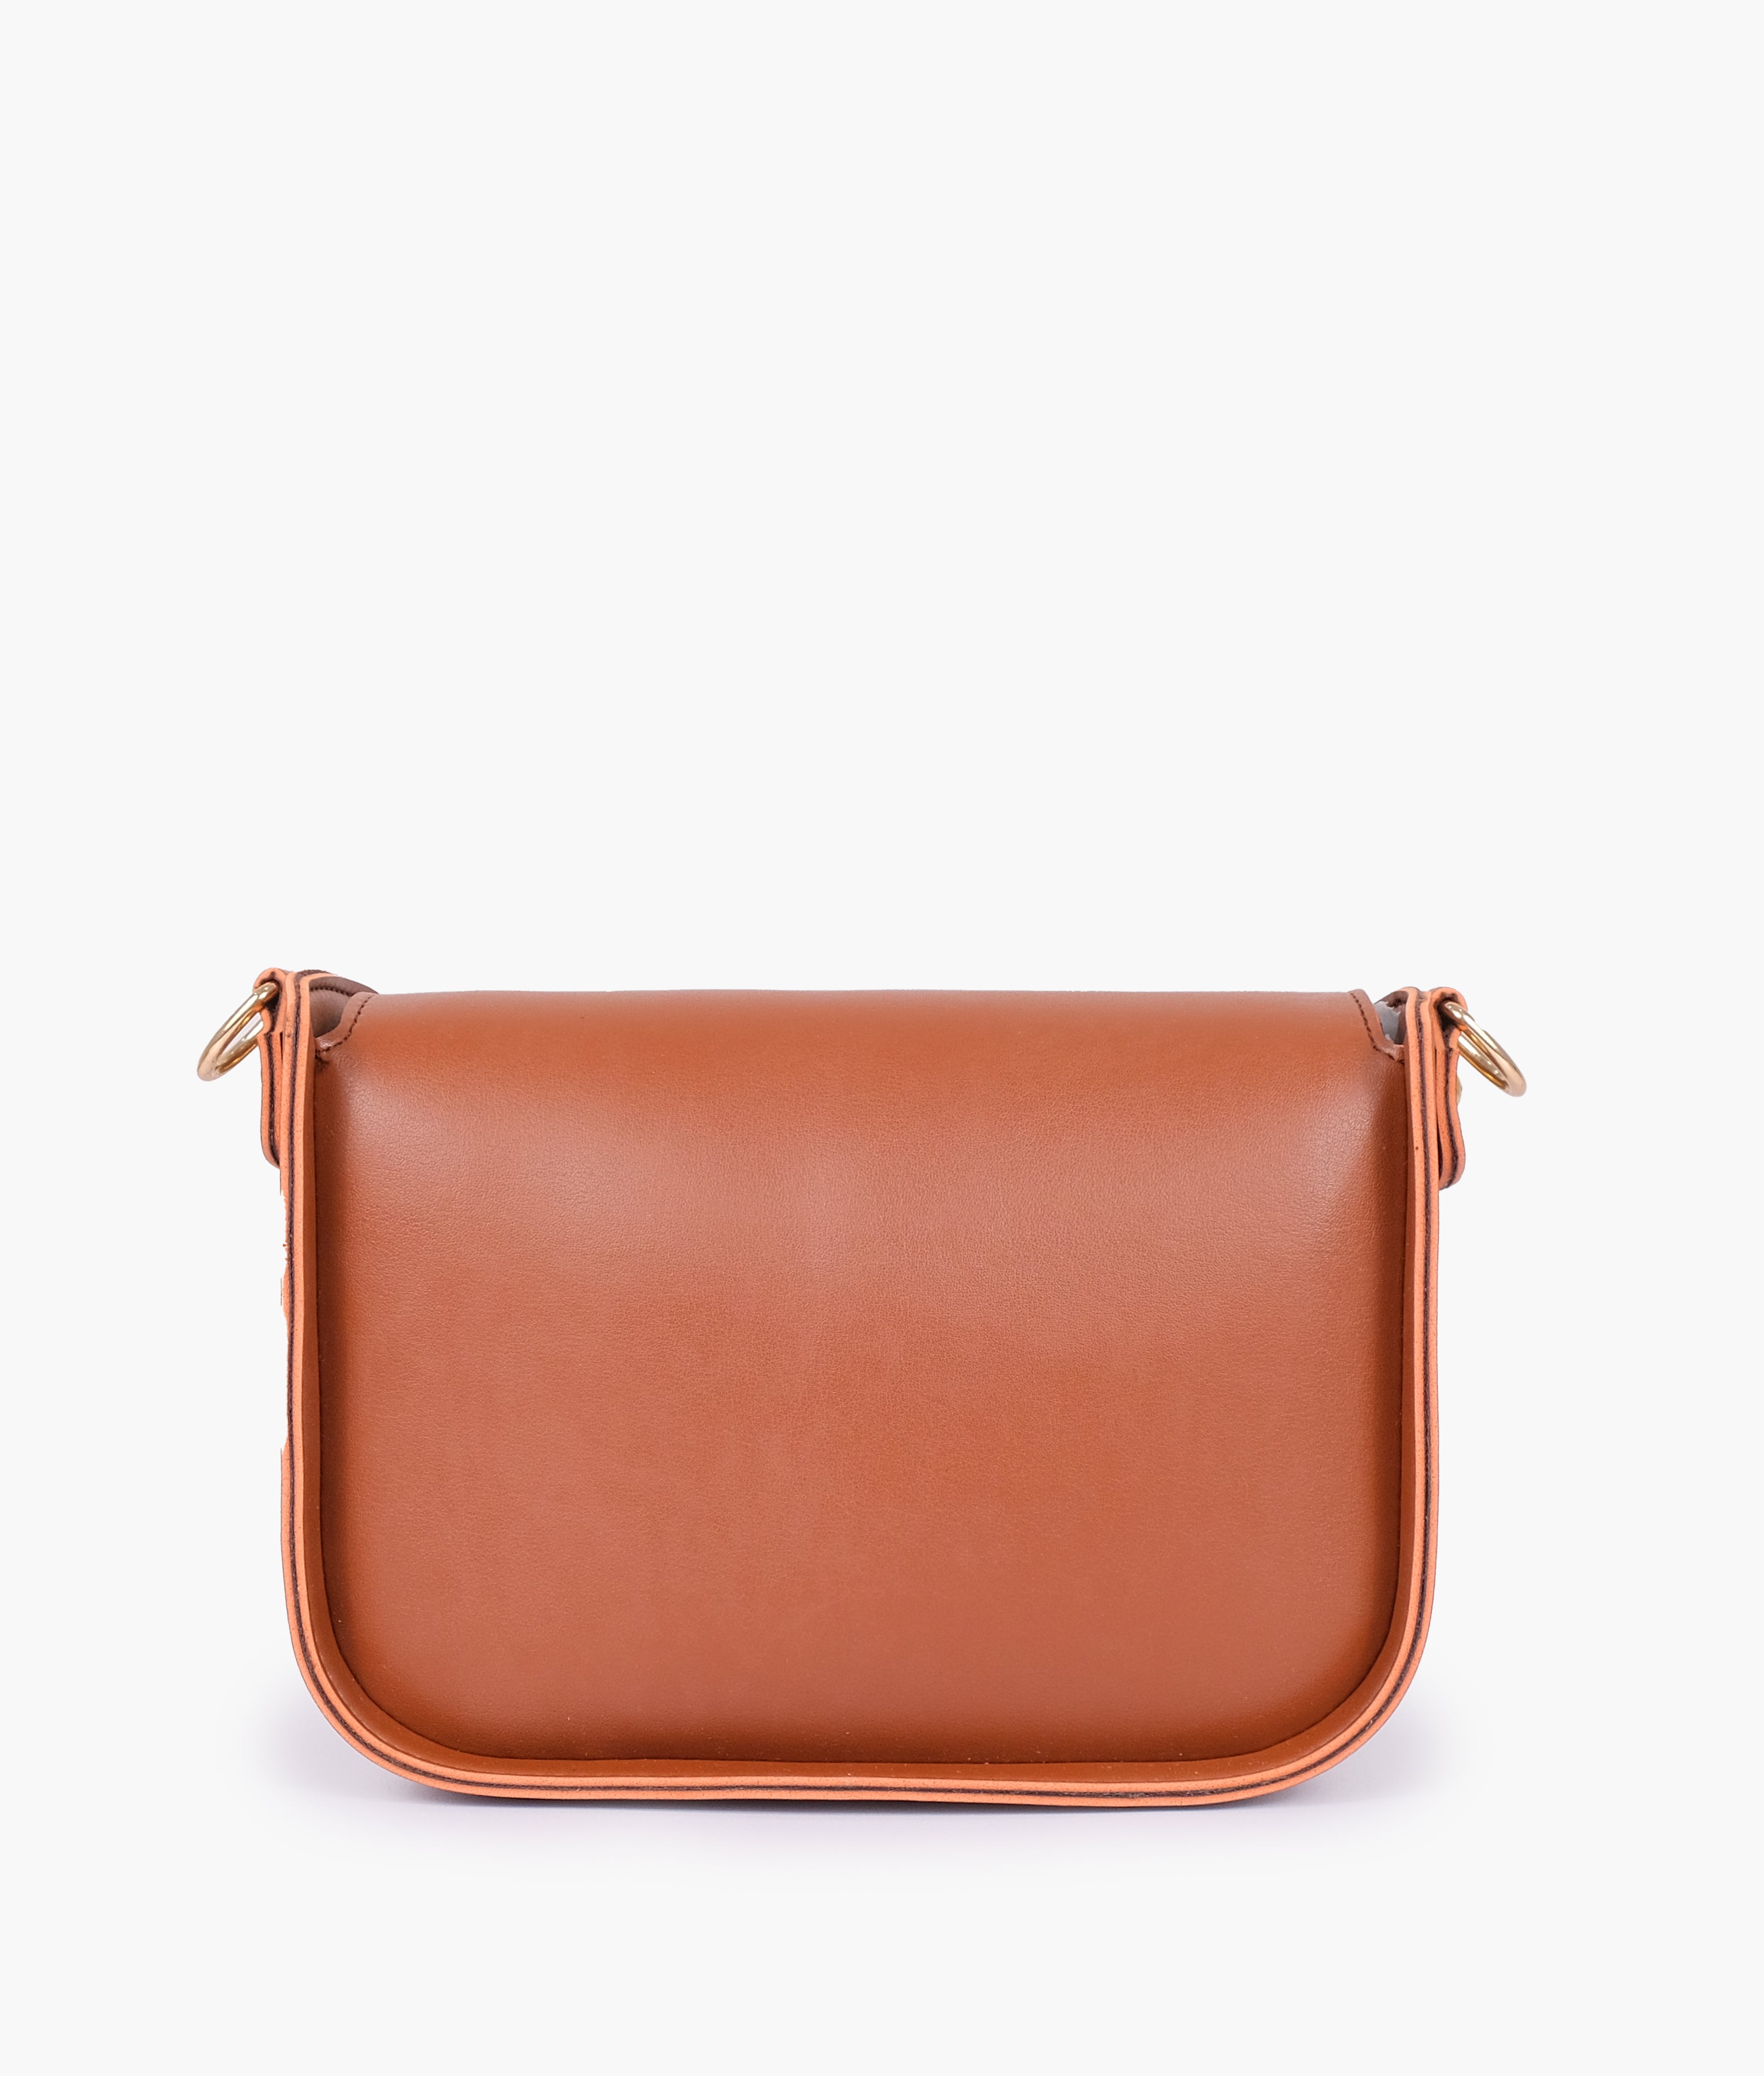 Brown saddle bag with twist lock